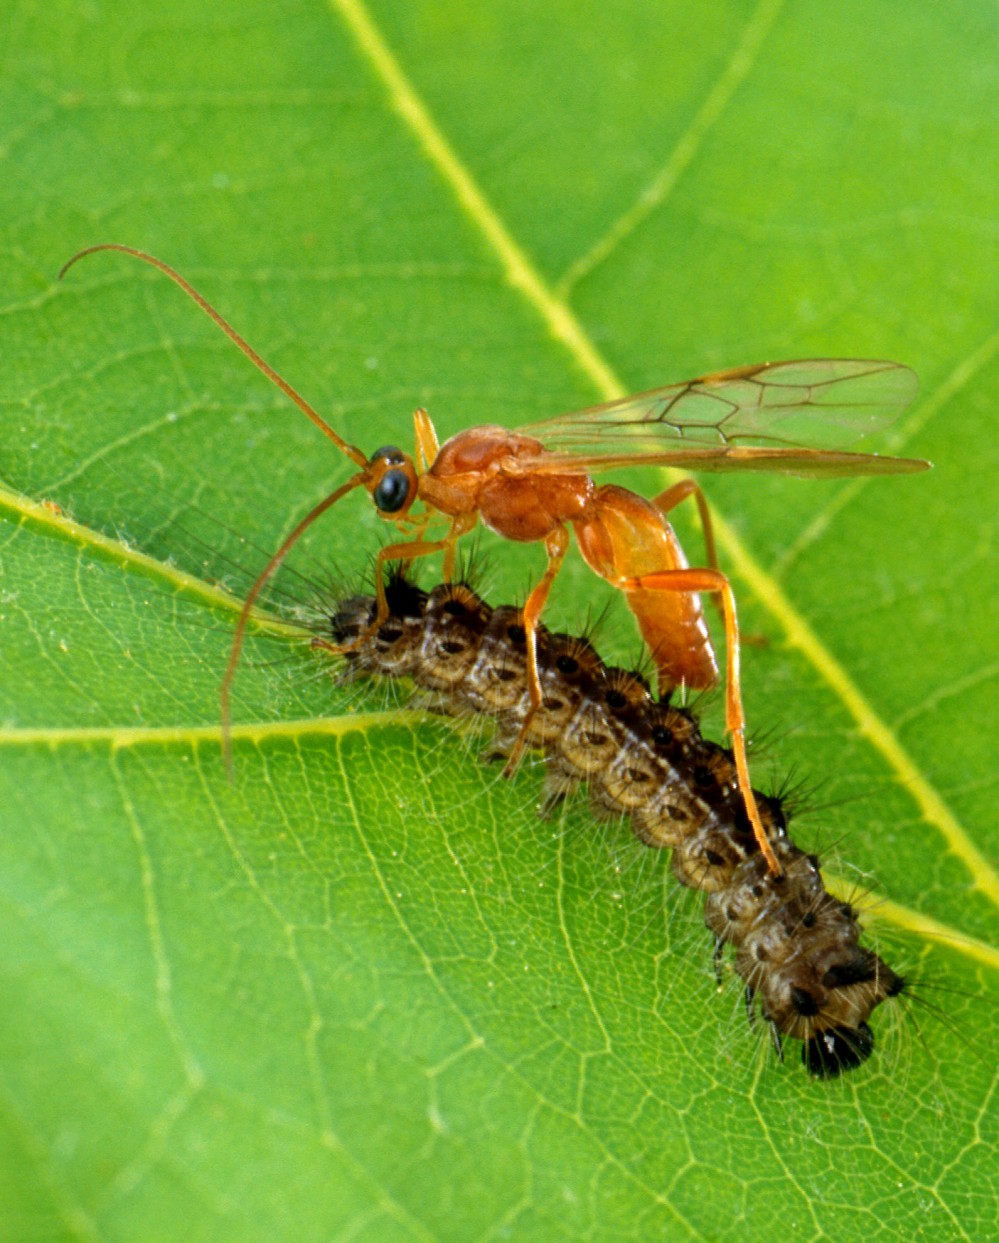 Aleiodes_indiscretus_wasp_parasitizing_gypsy_moth_caterpillar